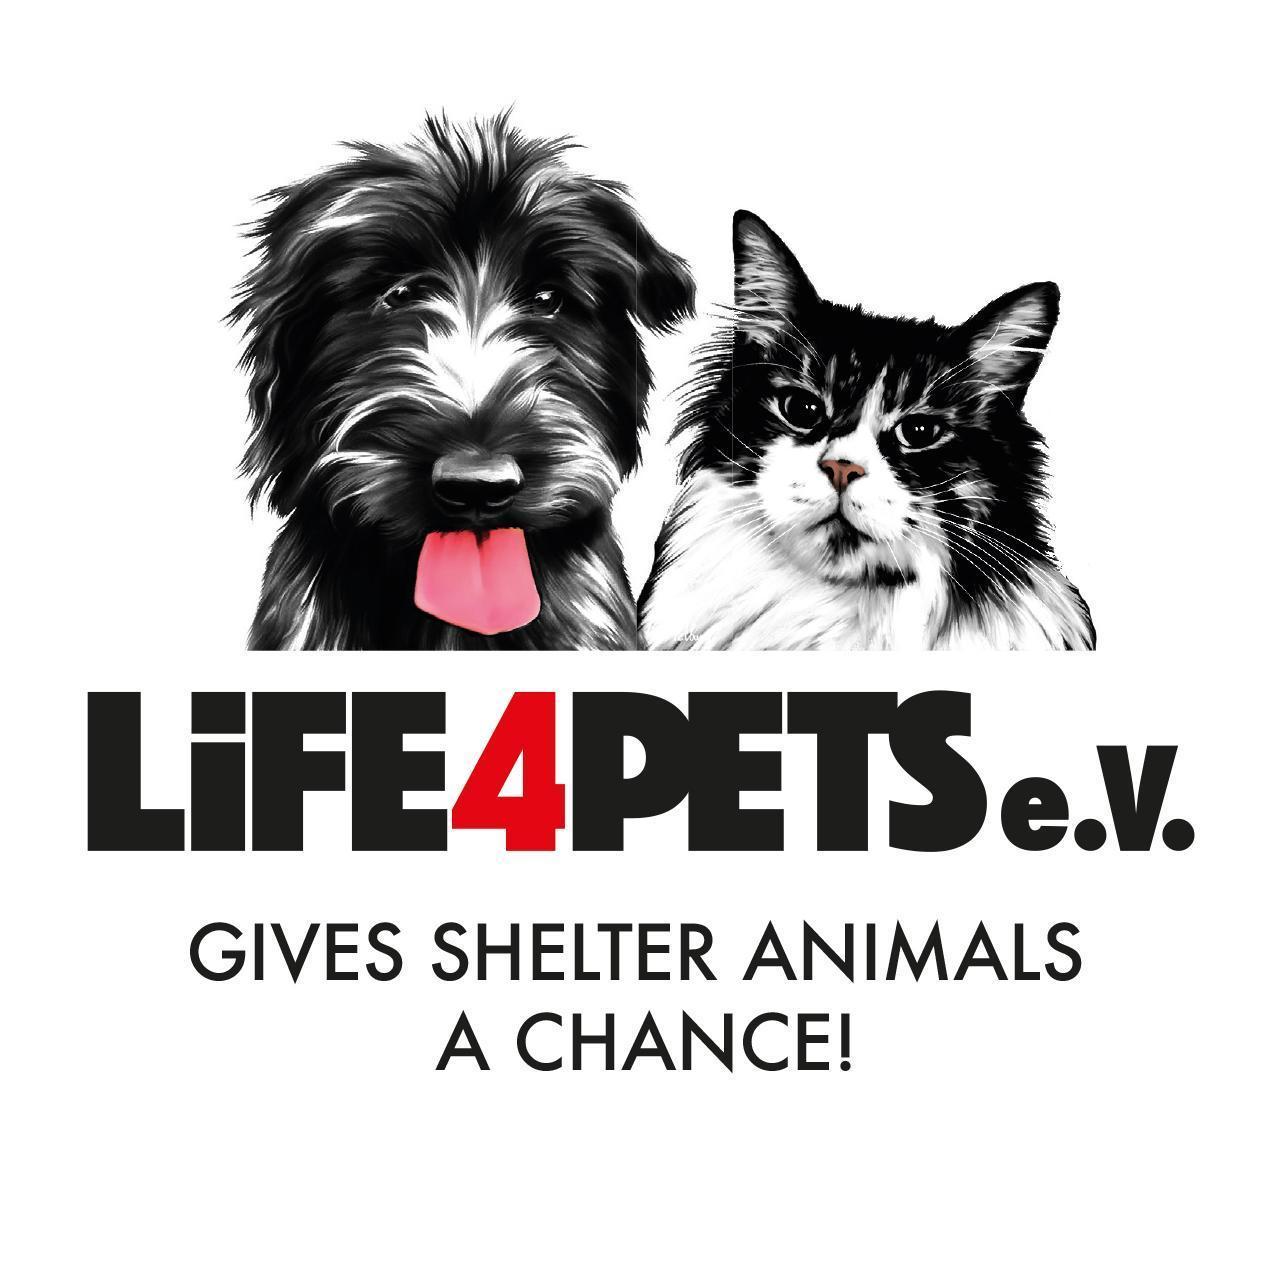 Humane Society. Animal Protection Society logo. Greenville Humane Society. ARB ID logo. Pet 4 book